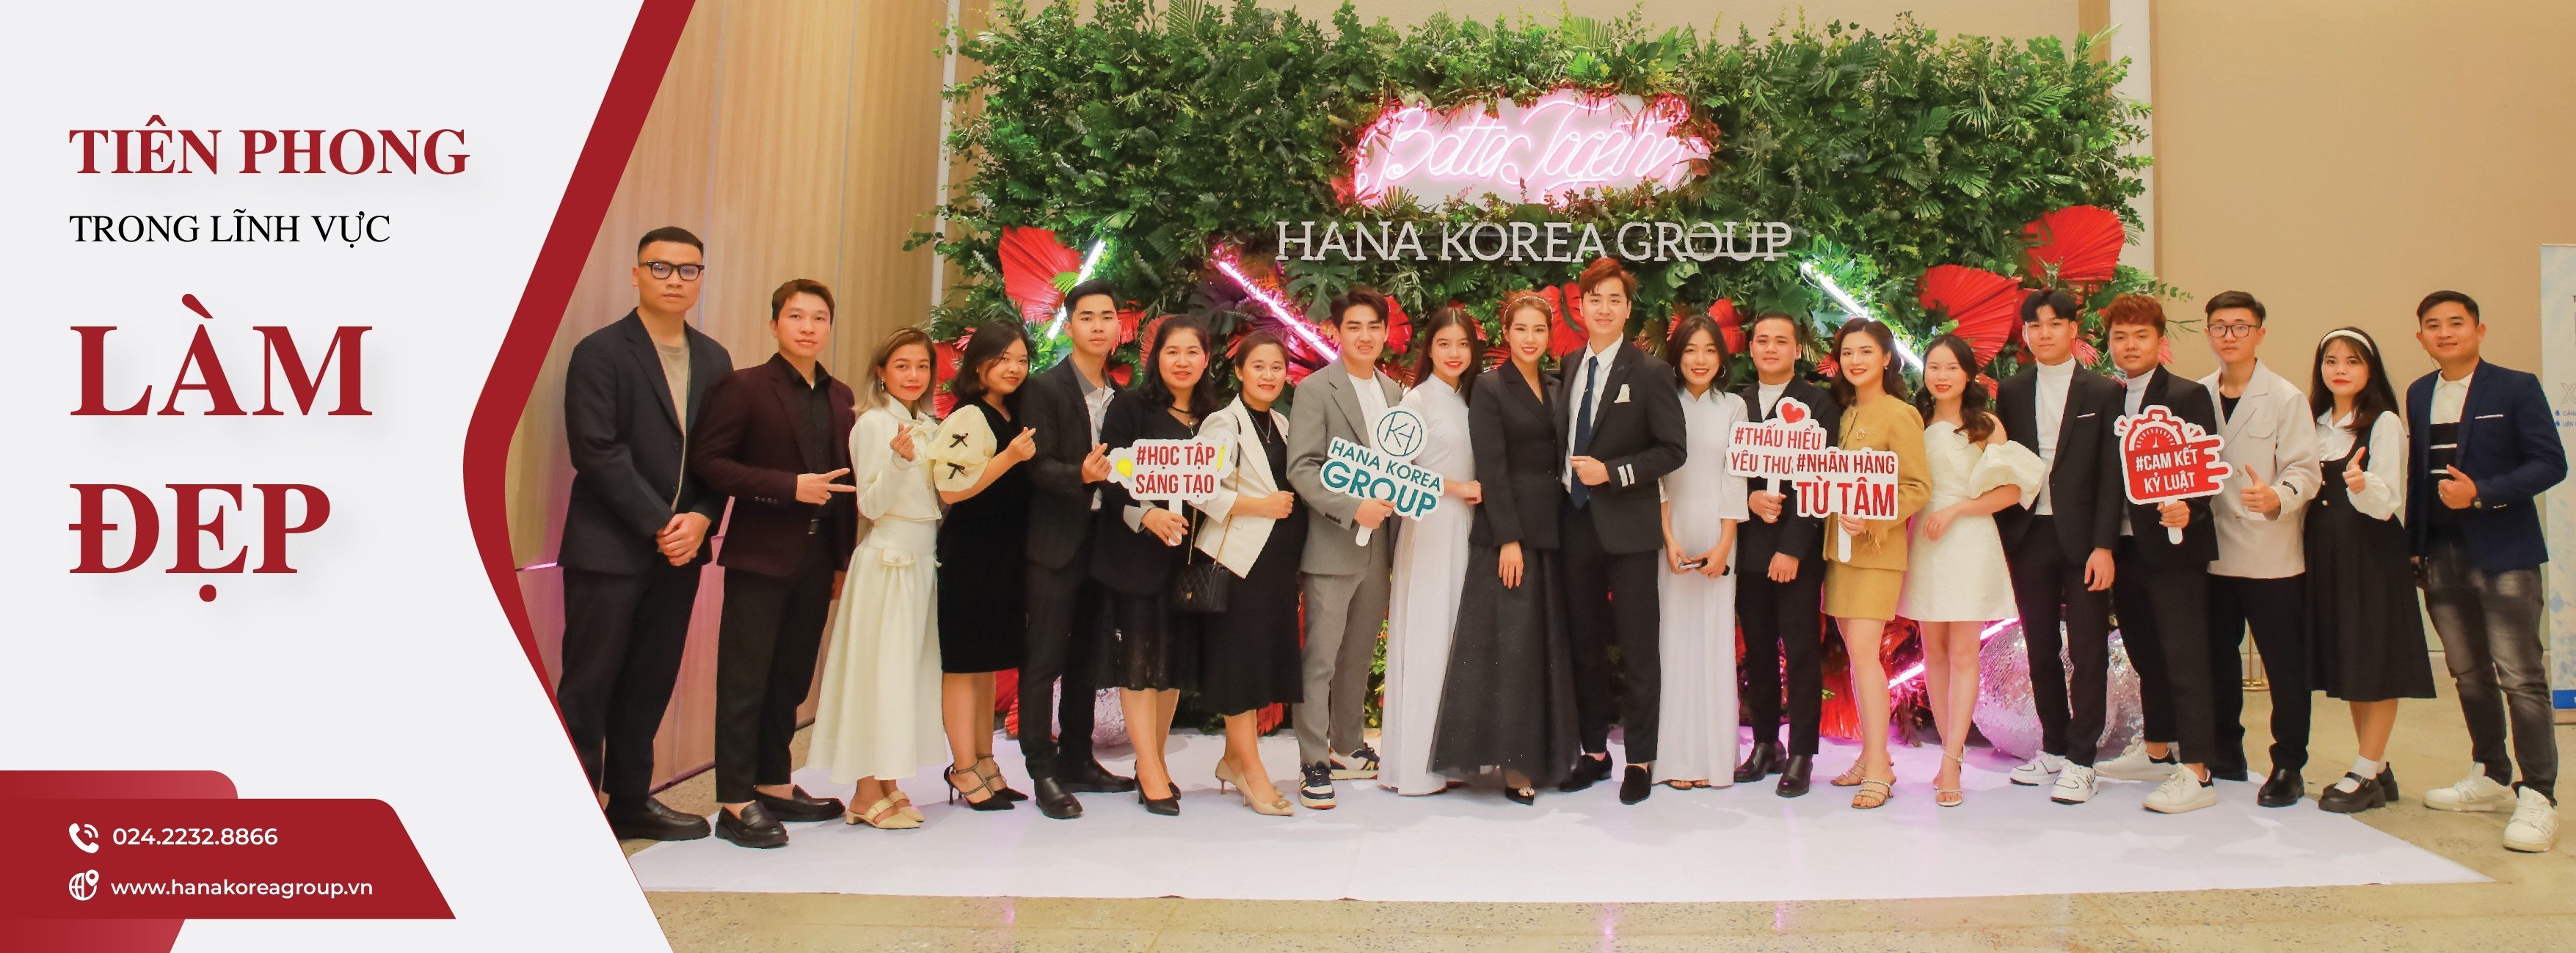 HANA KOREA GROUP